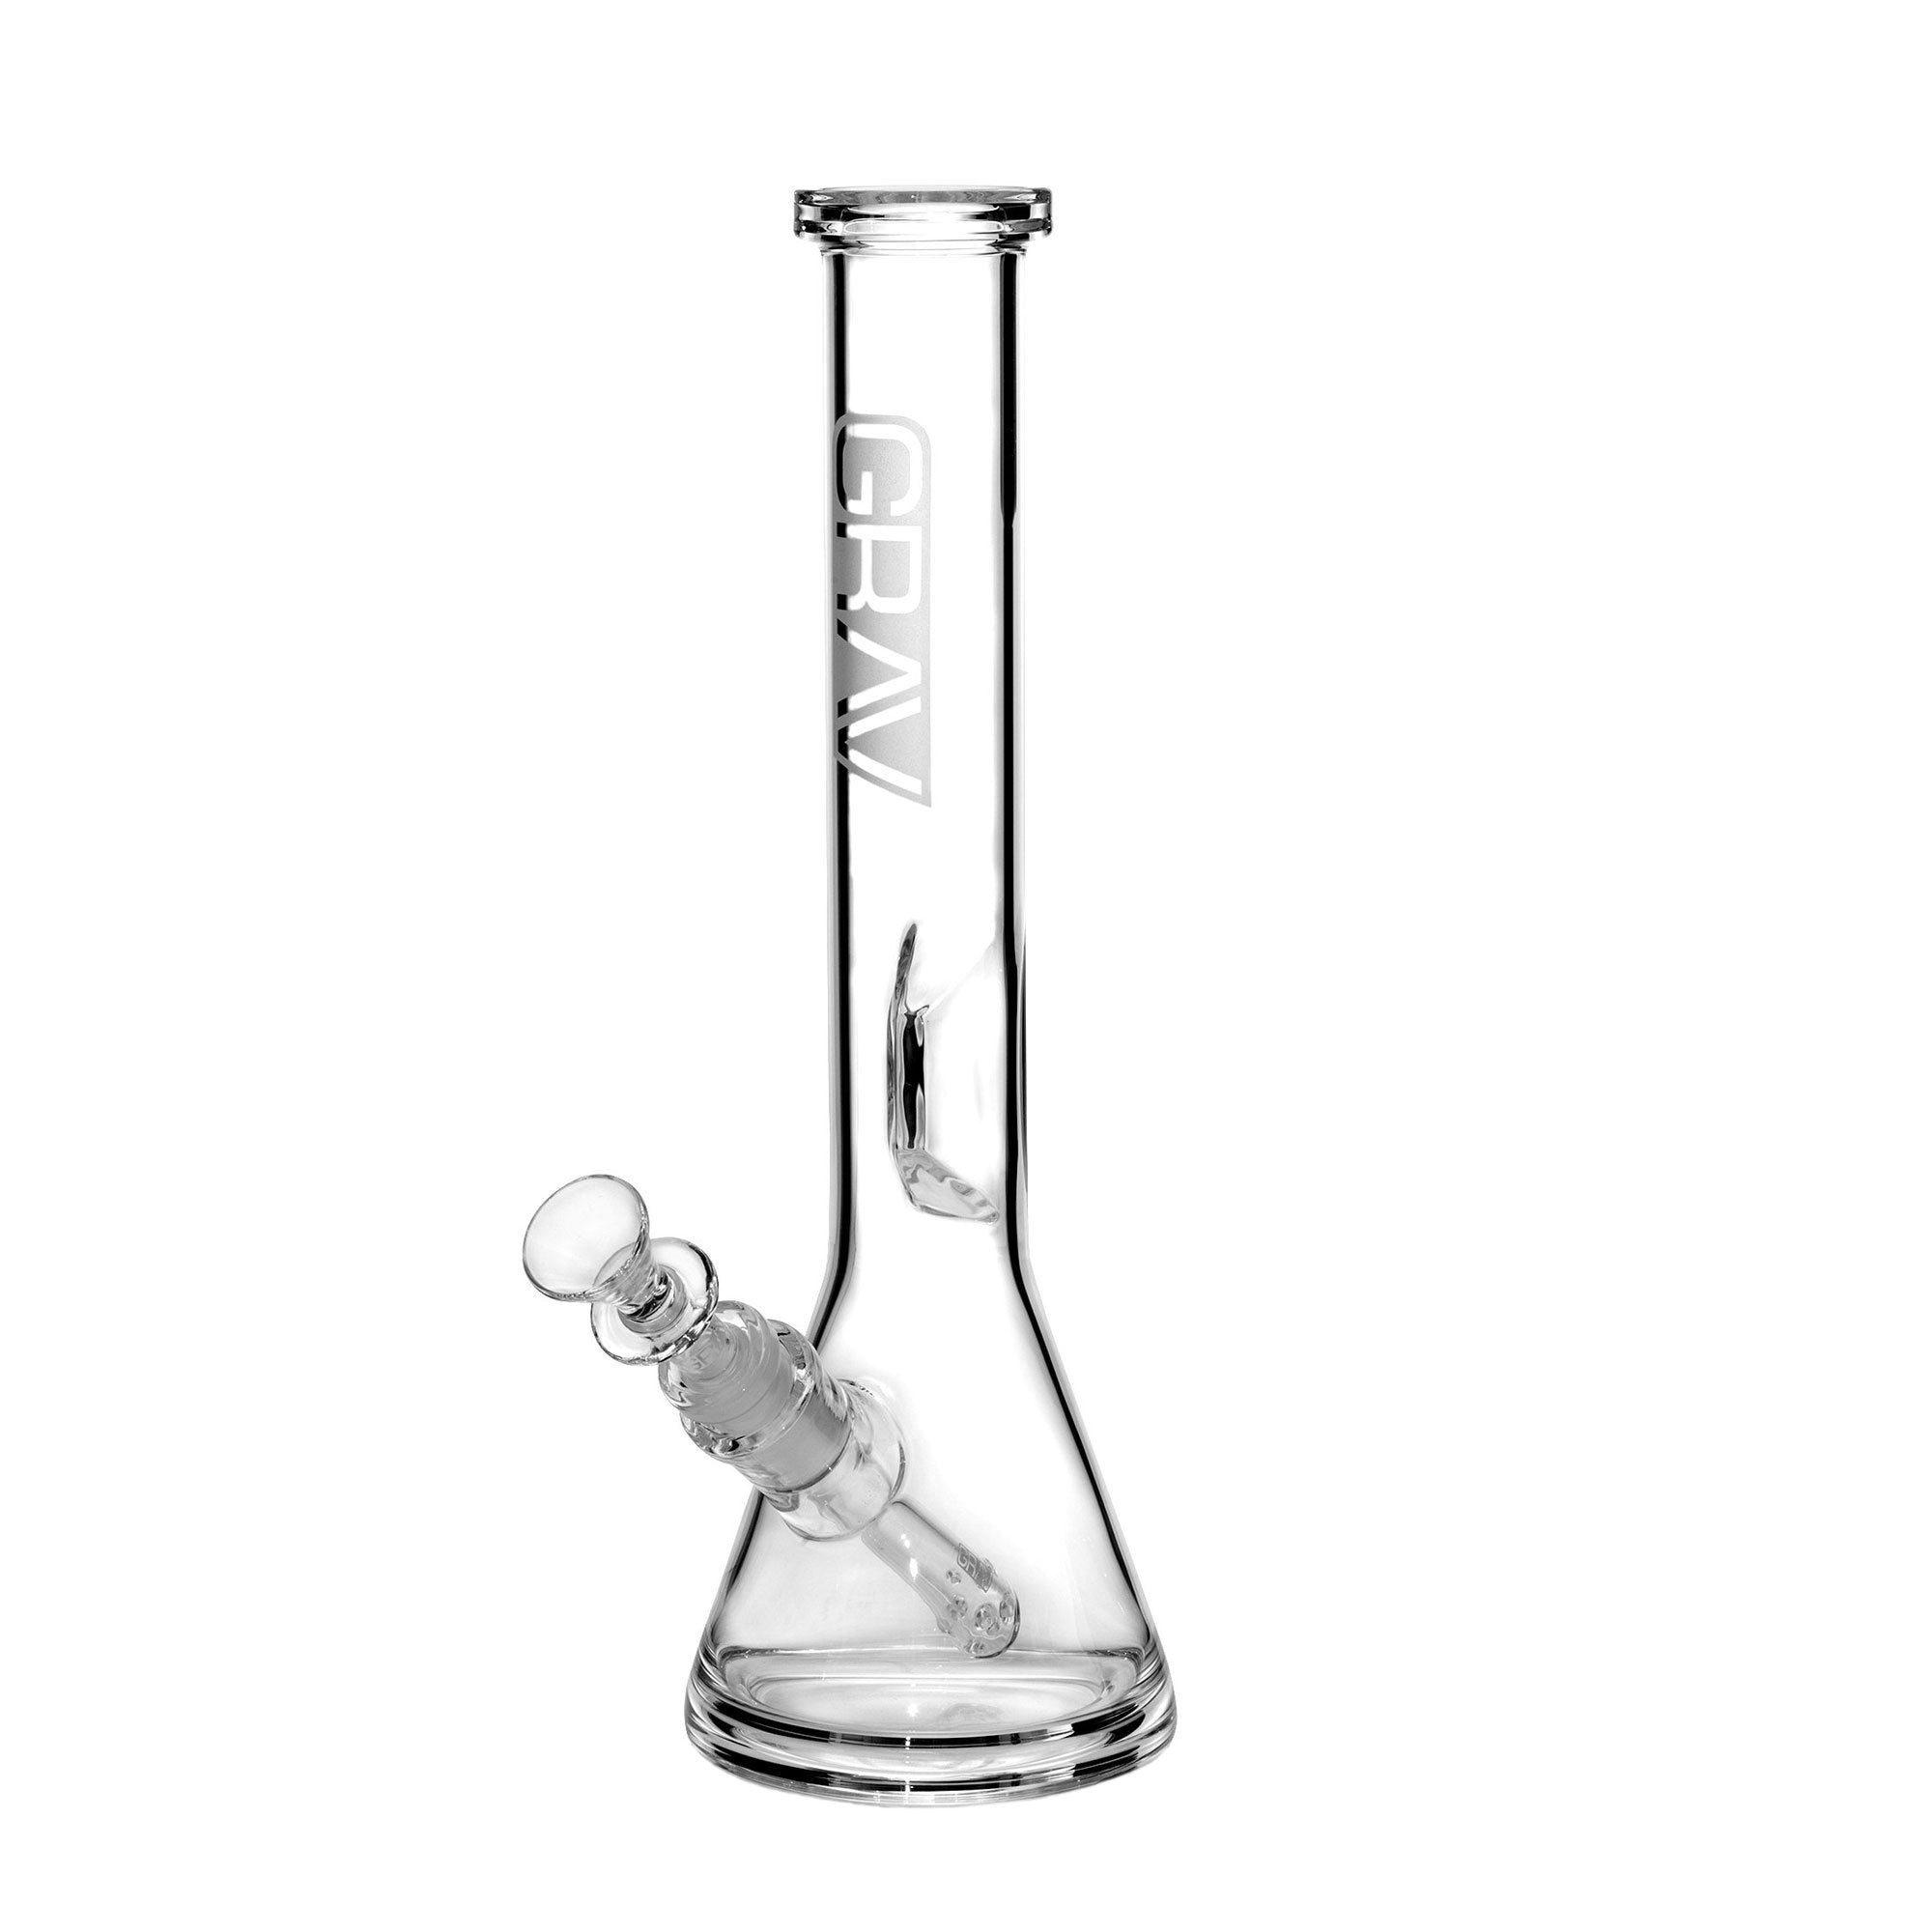 GRAV Small Beaker Bong / $ 119.99 at 420 Science